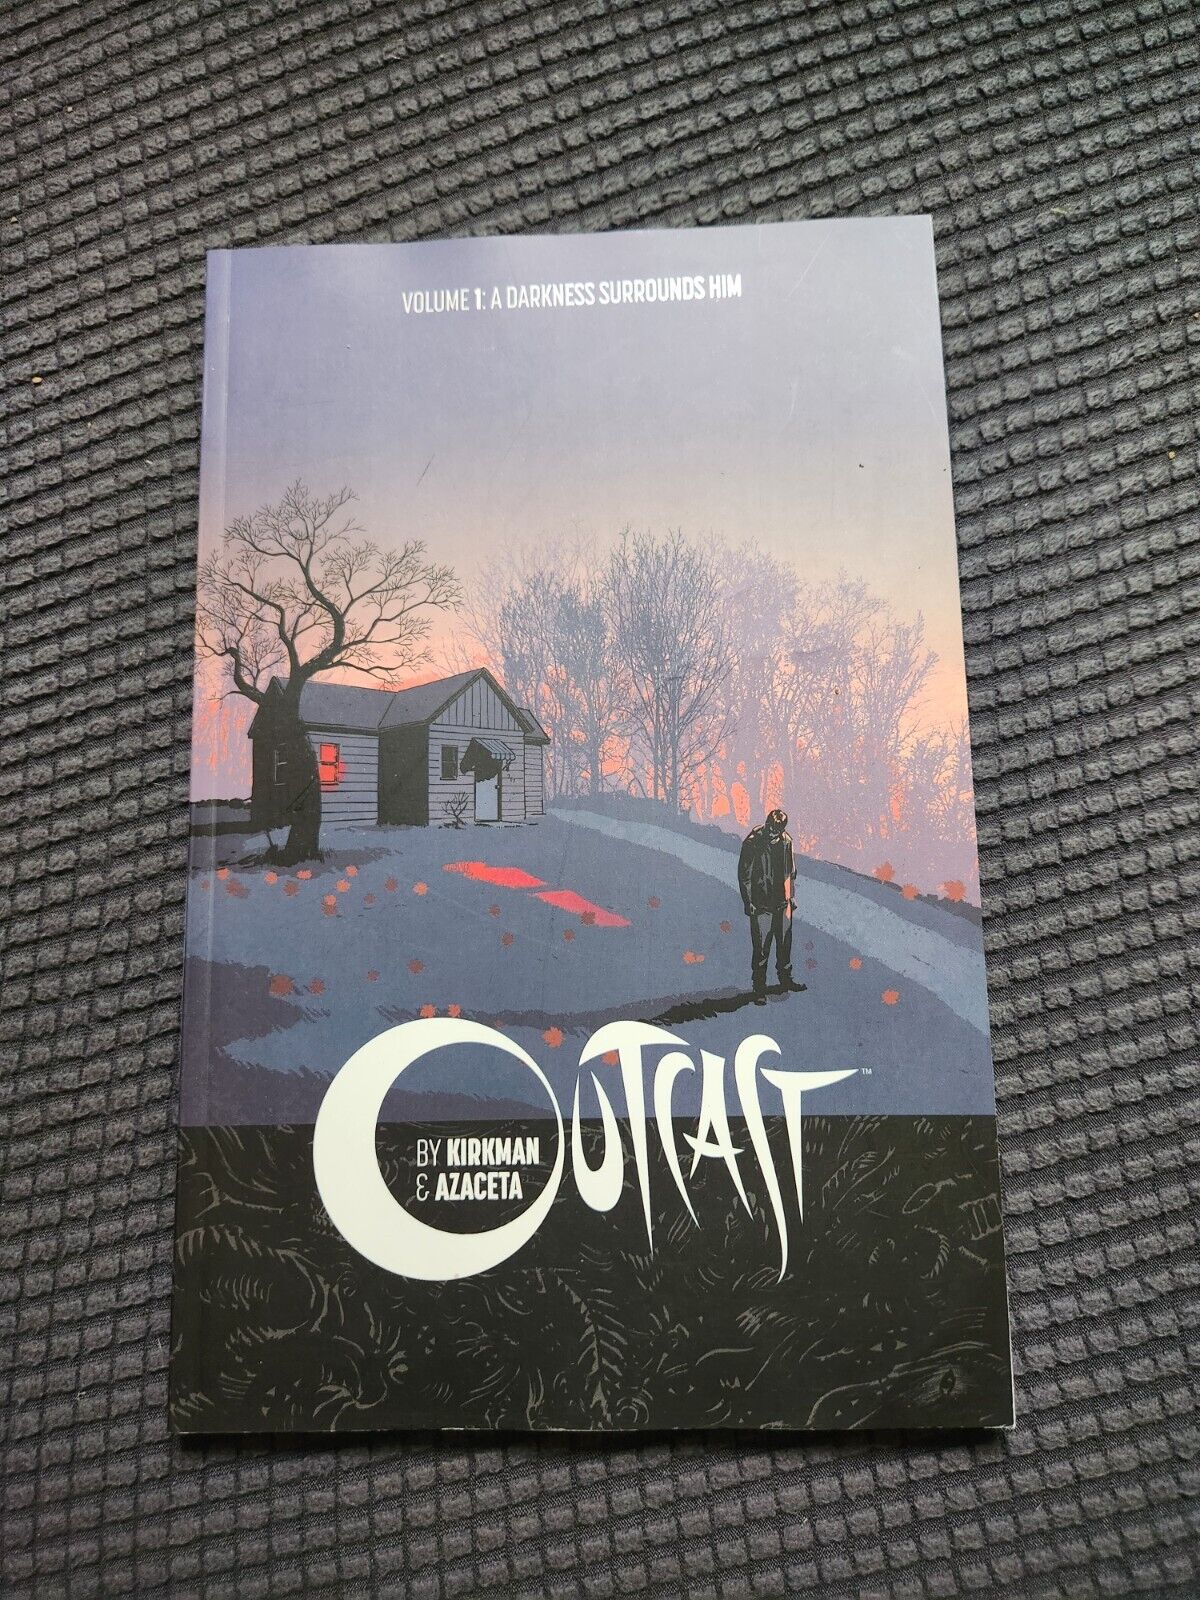 Outcast Volume 1: A Darkness Surrounds Him (Image Comics) Kirkman